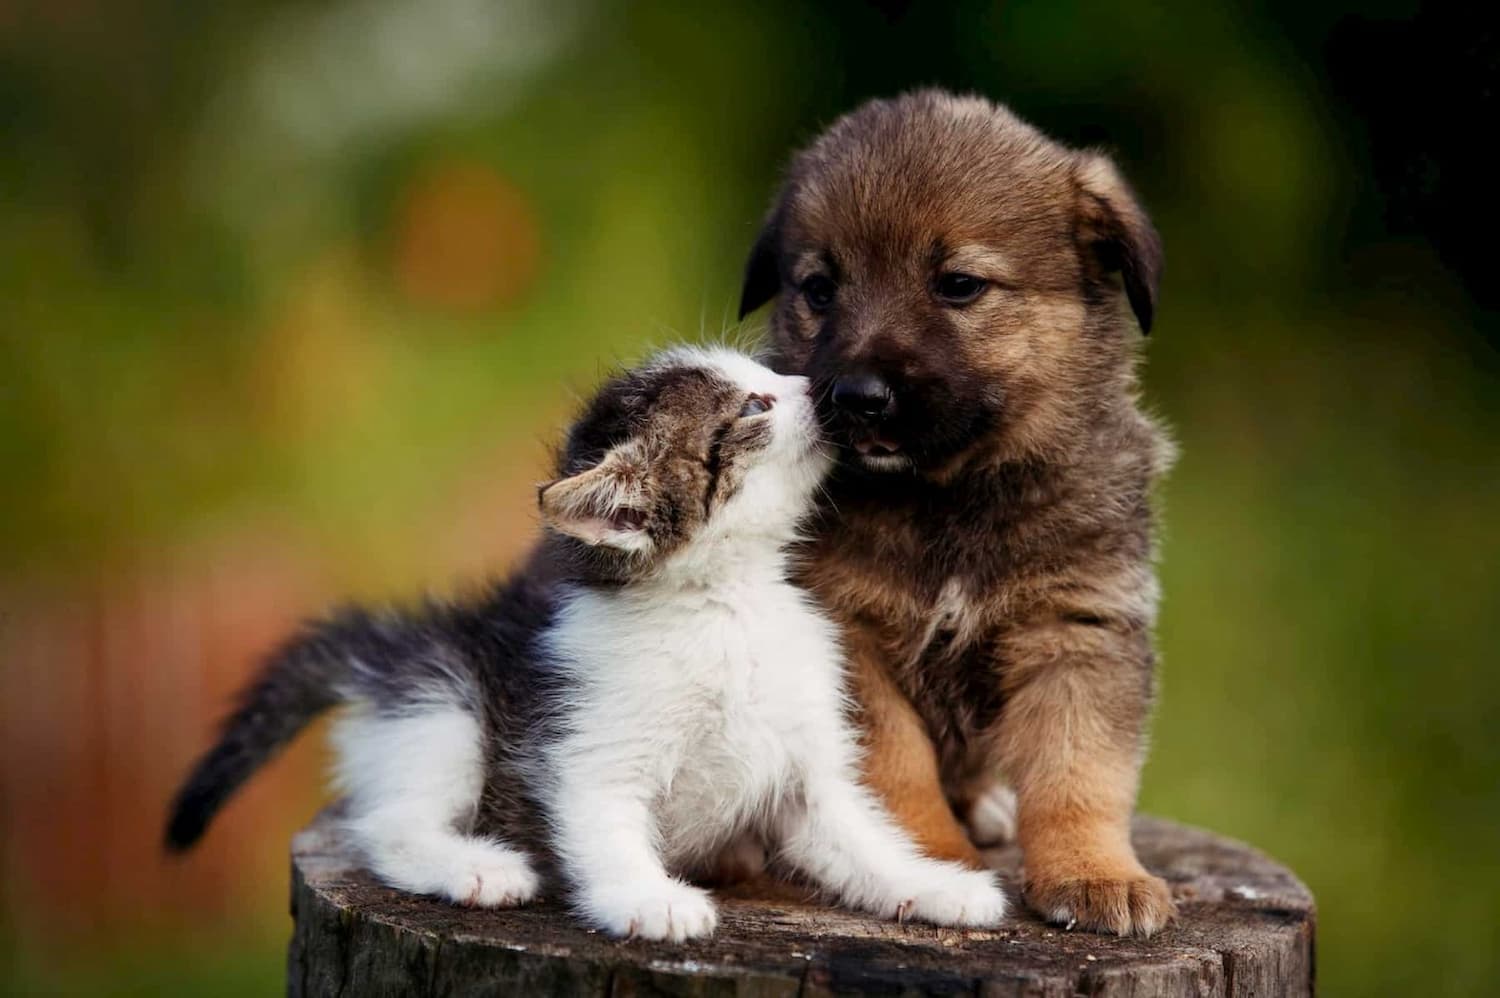 Cat kissing dog